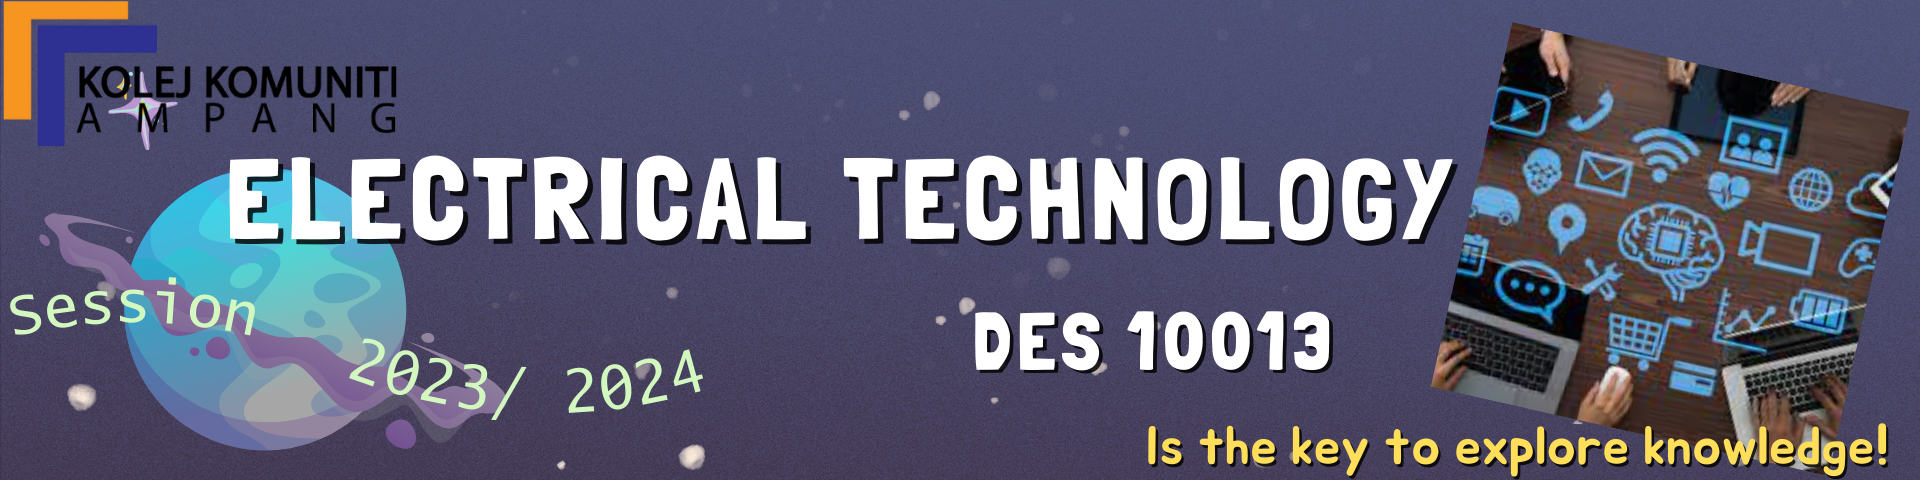 DES 10013 ELECTRICAL TECHNOLOGY